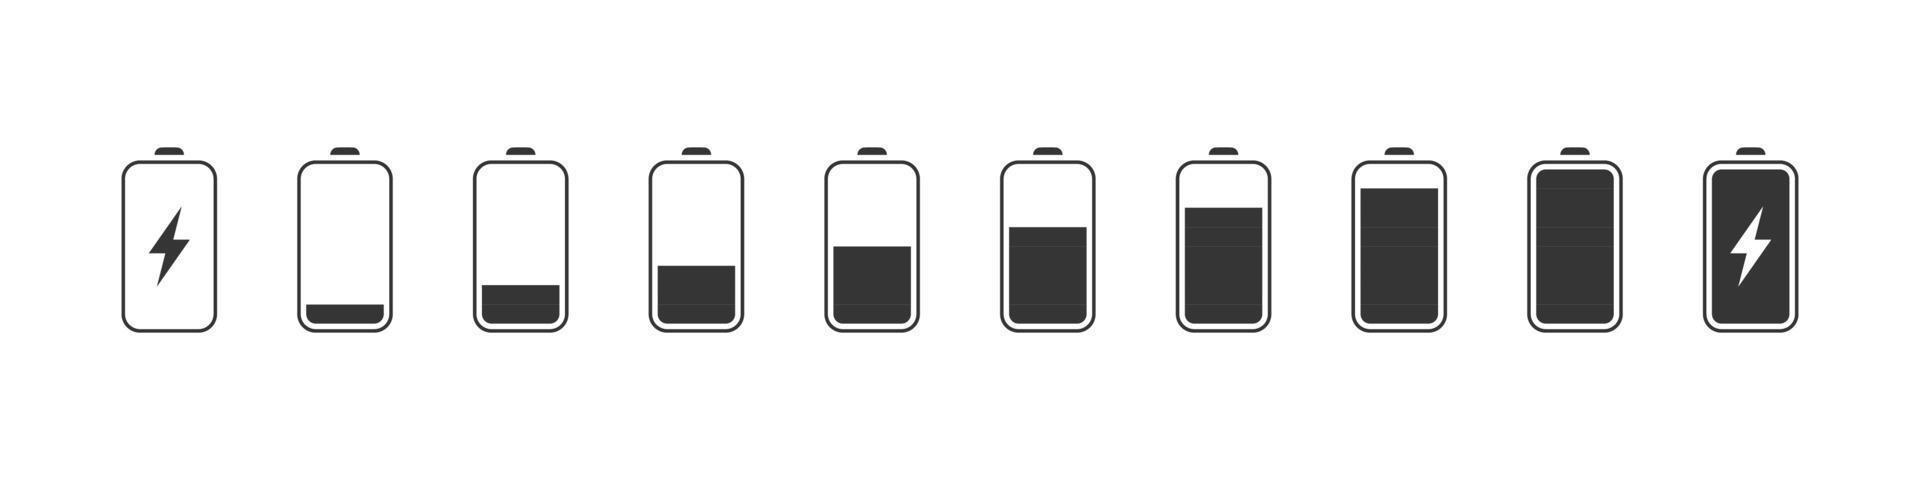 Battery icons. Battery charging icons. Battery charge levels. Vector illustration